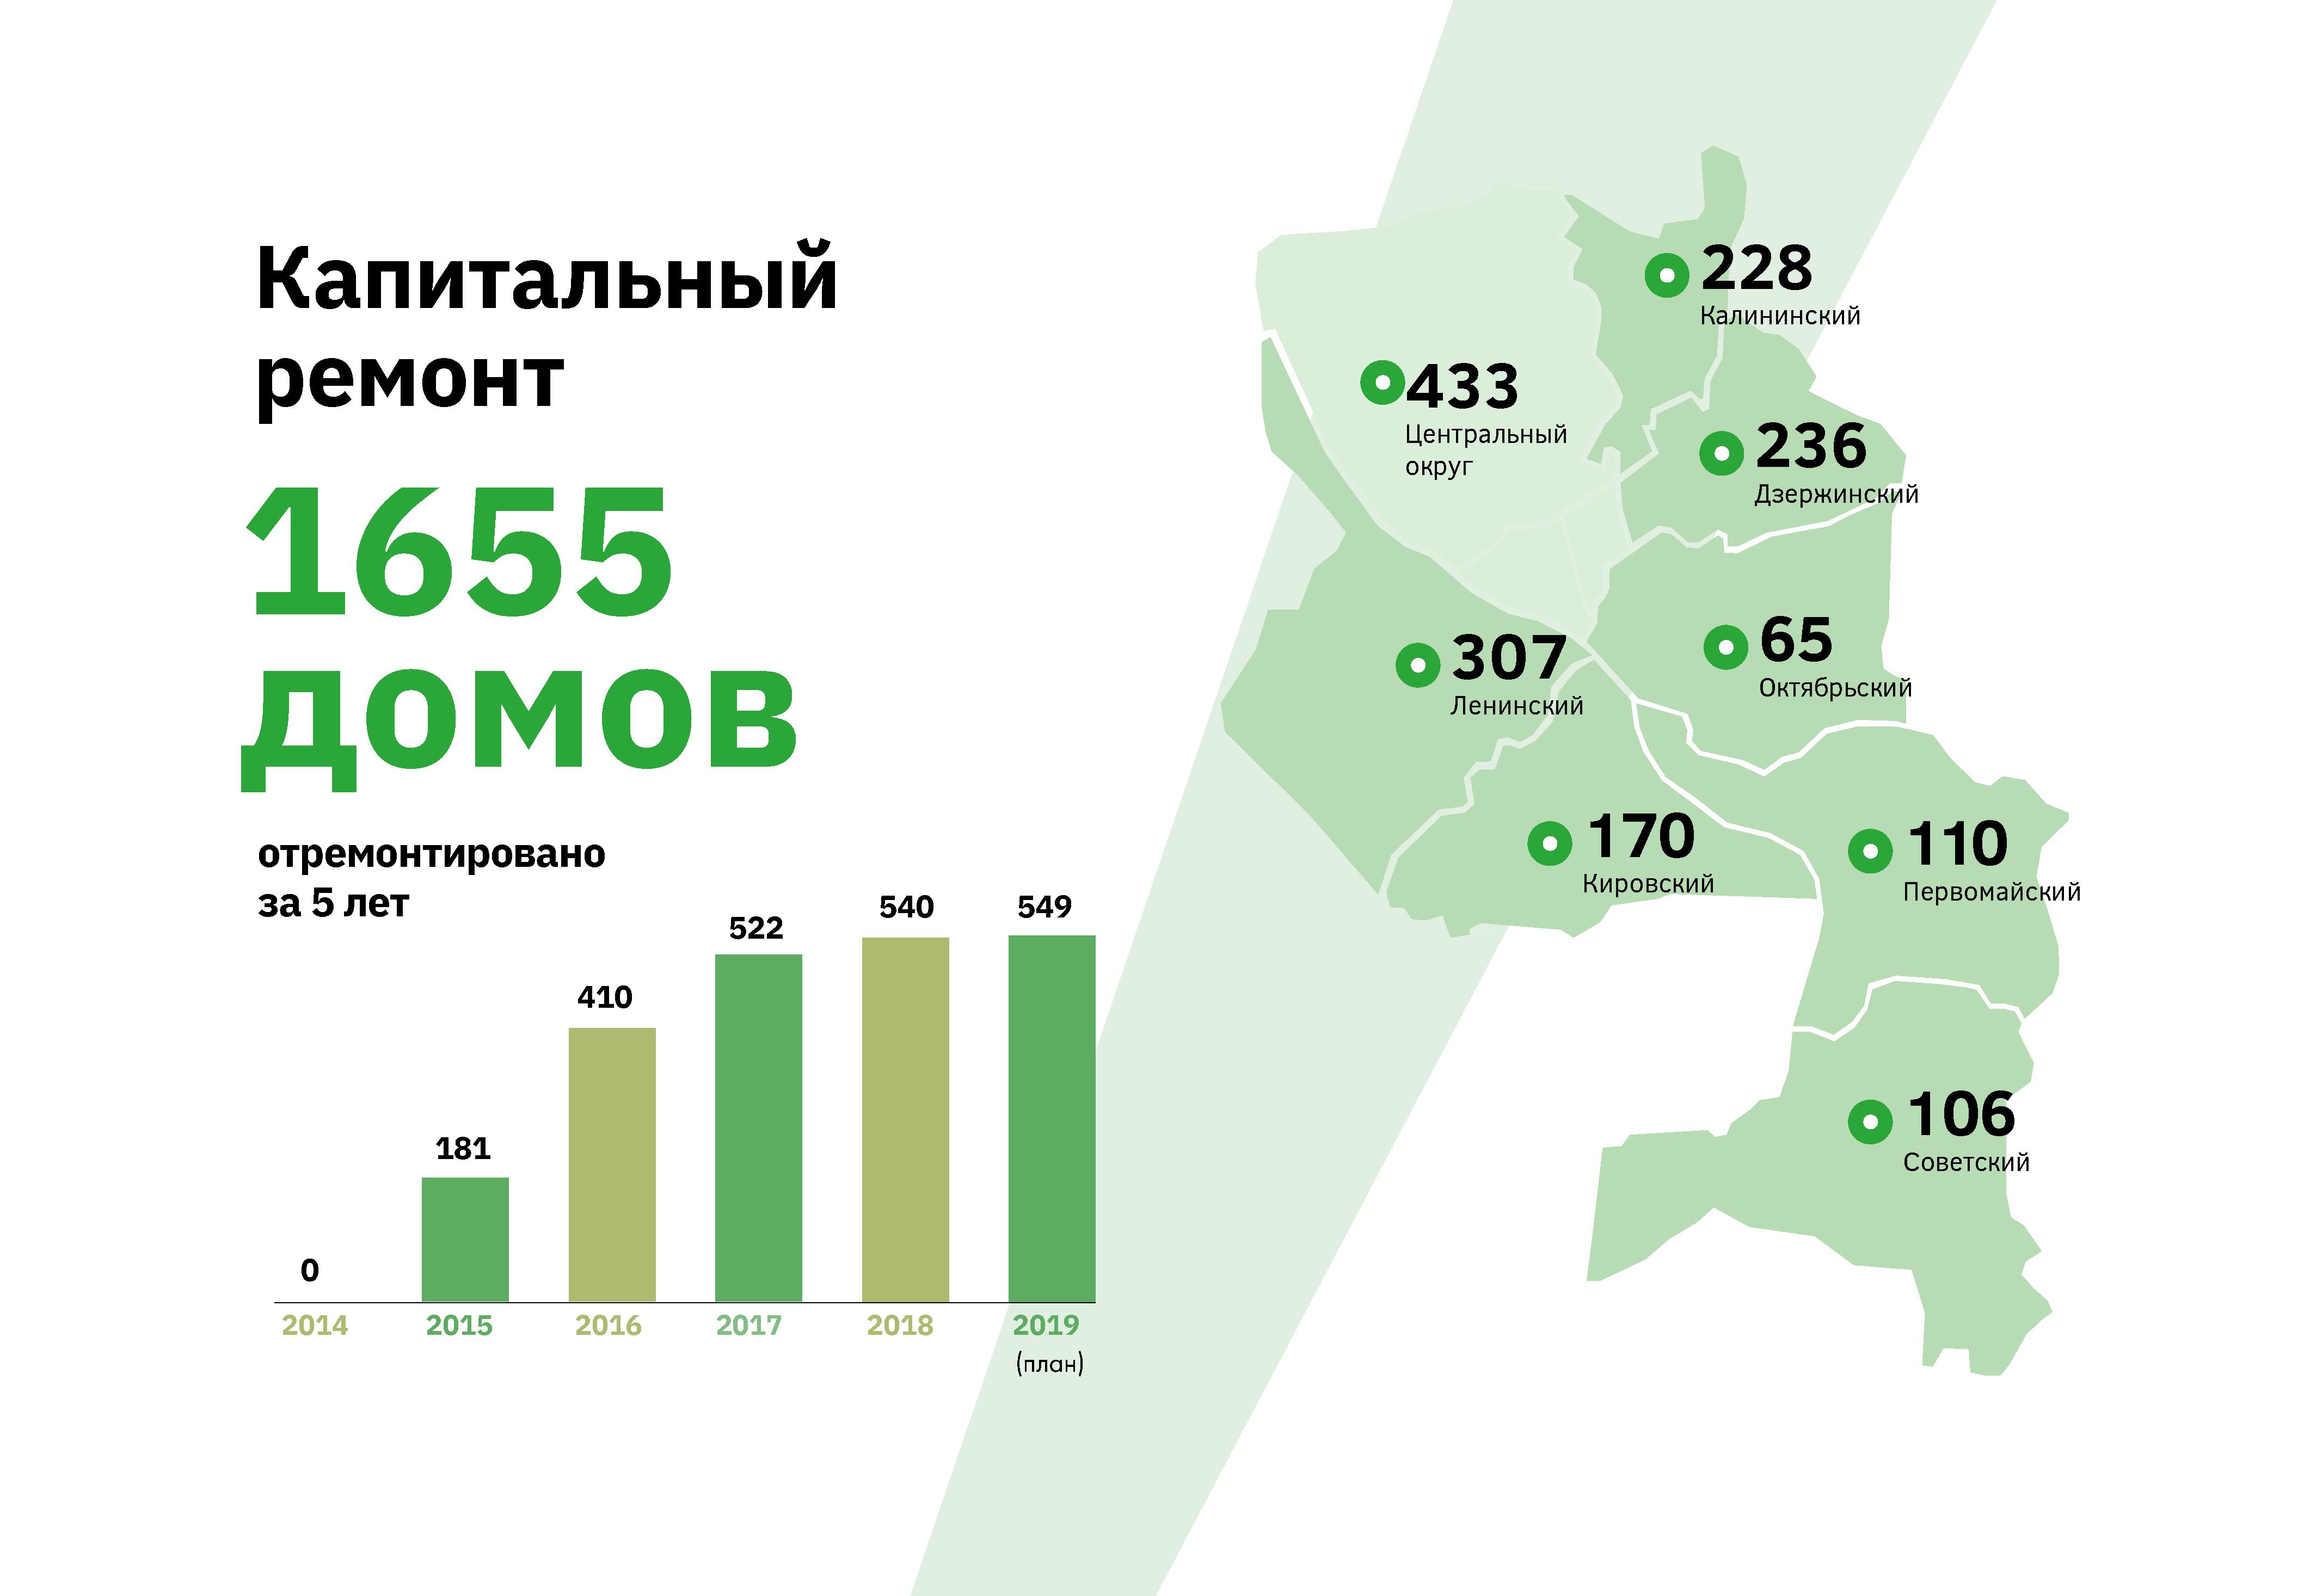 Инфографика: Новосибирск в цифрах и фактах